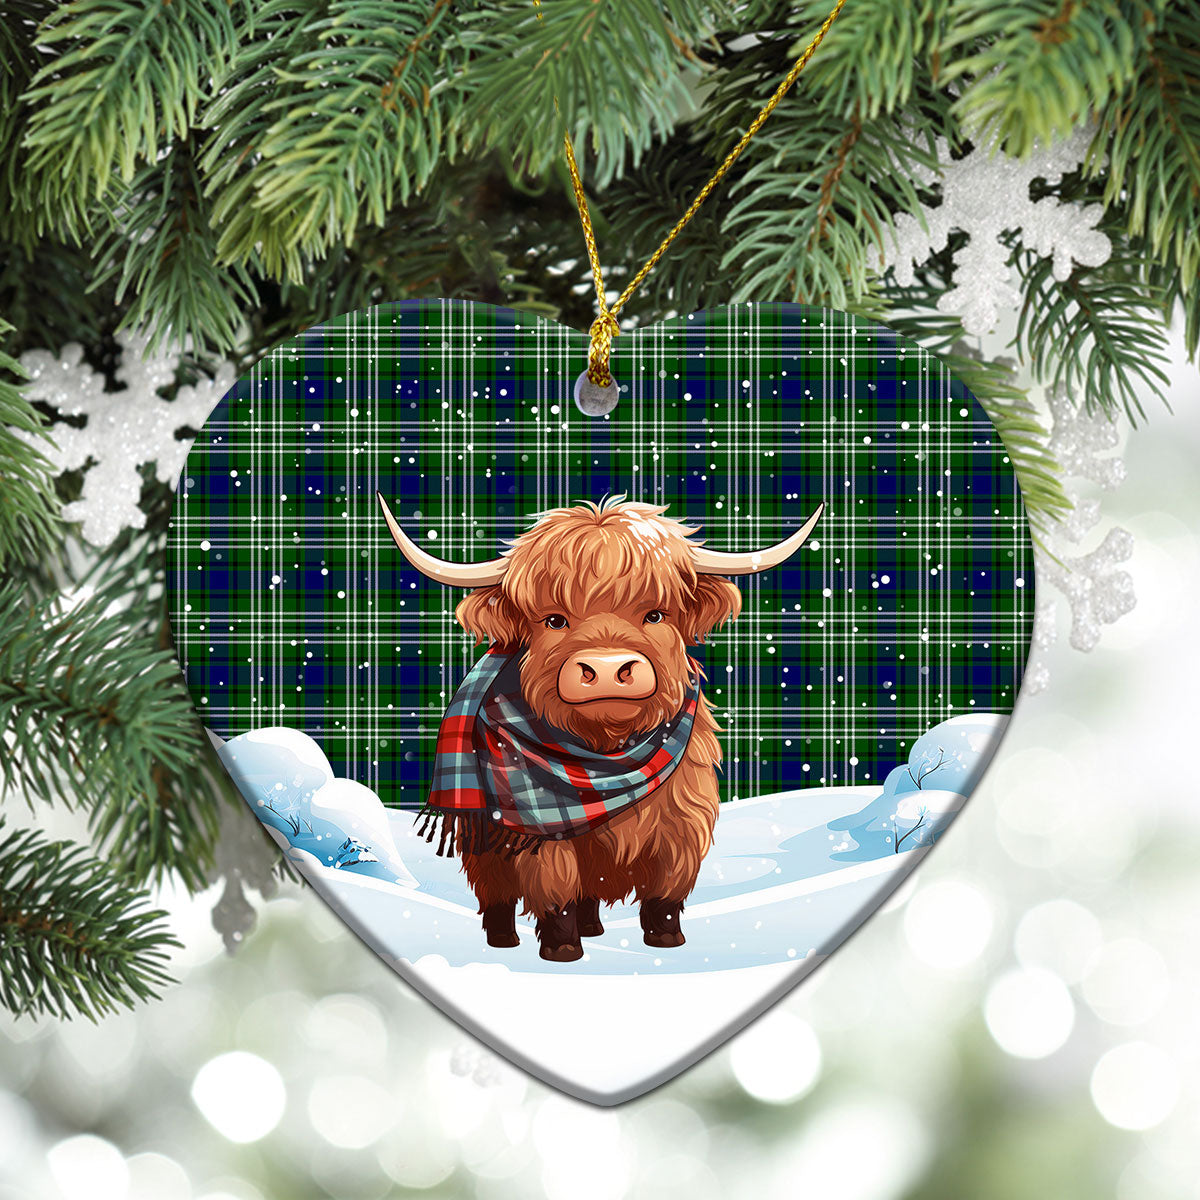 Learmonth Tartan Christmas Ceramic Ornament - Highland Cows Snow Style